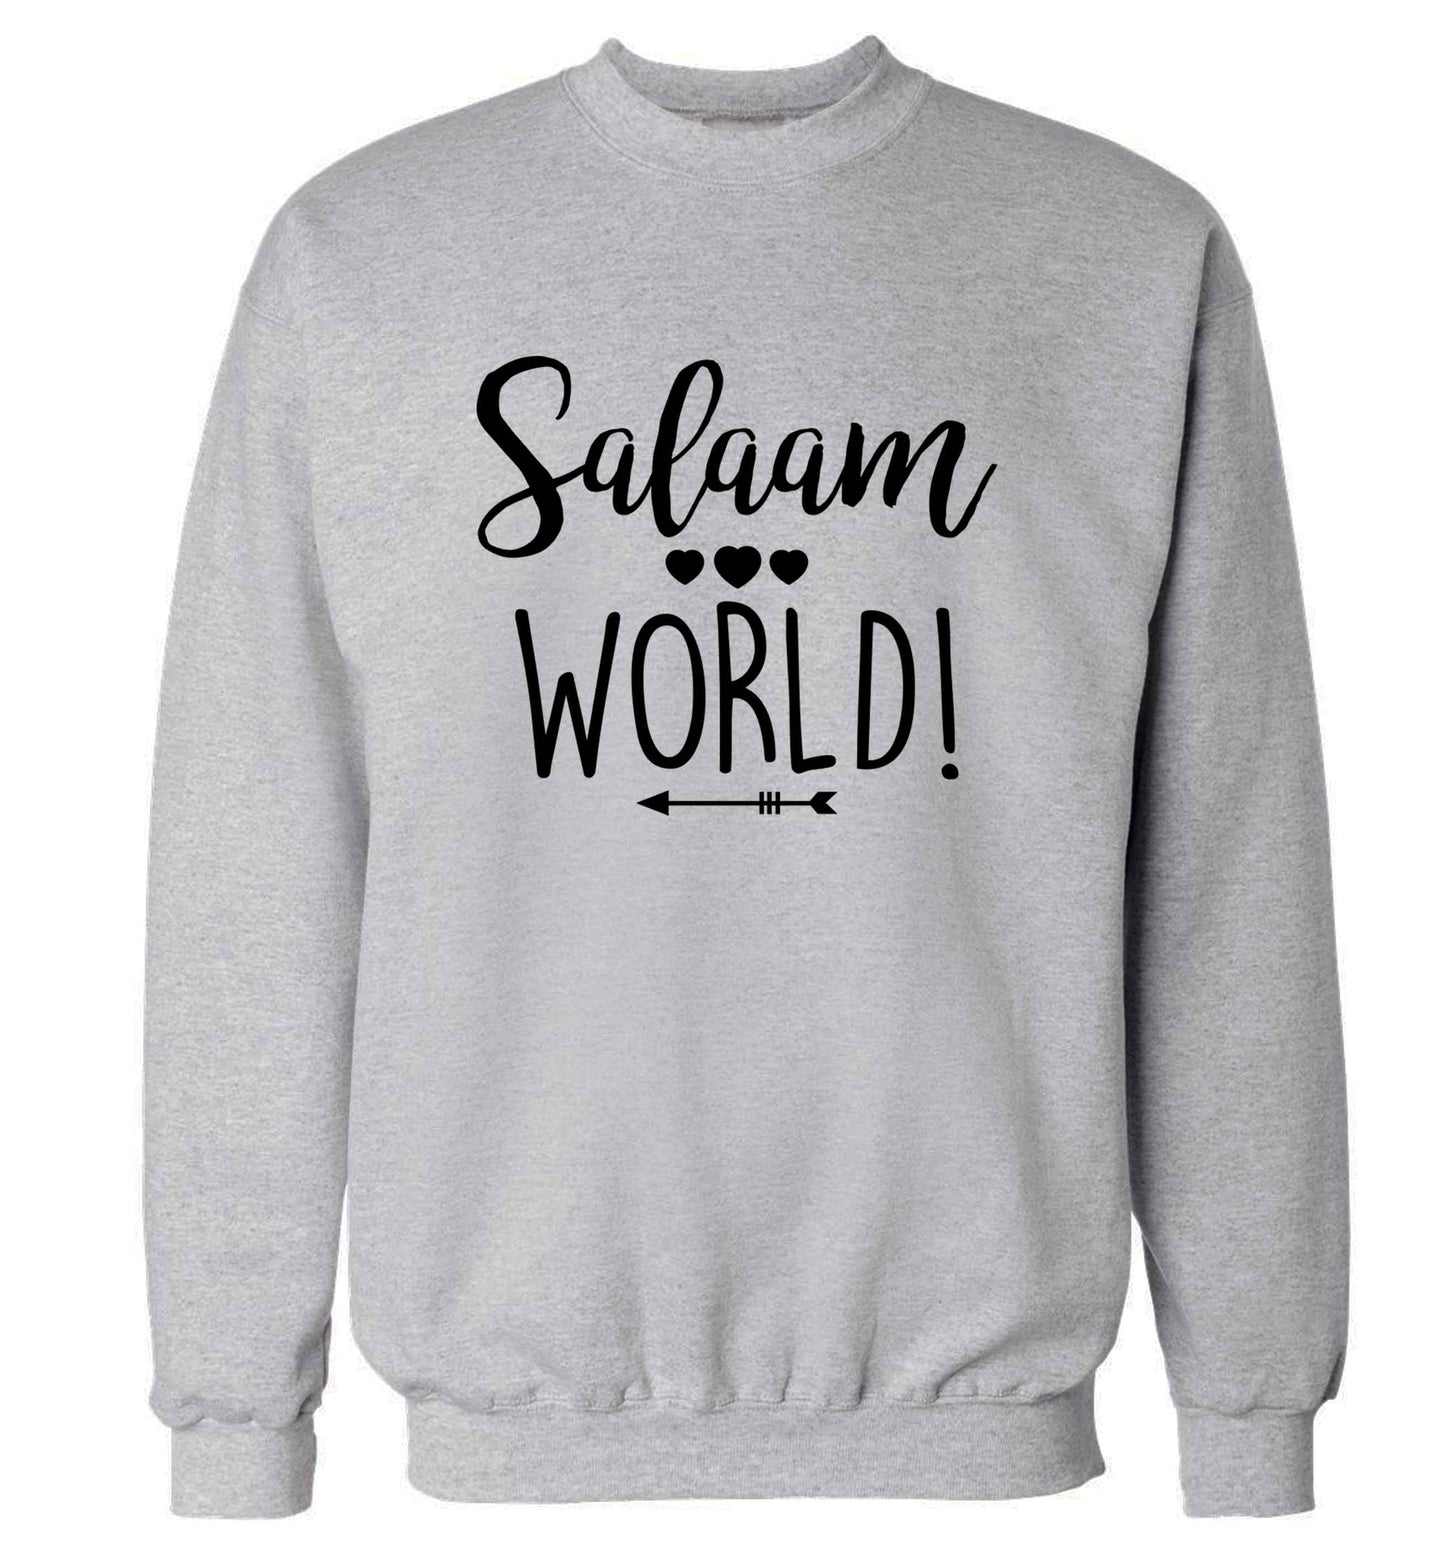 Salaam world adult's unisex grey sweater 2XL